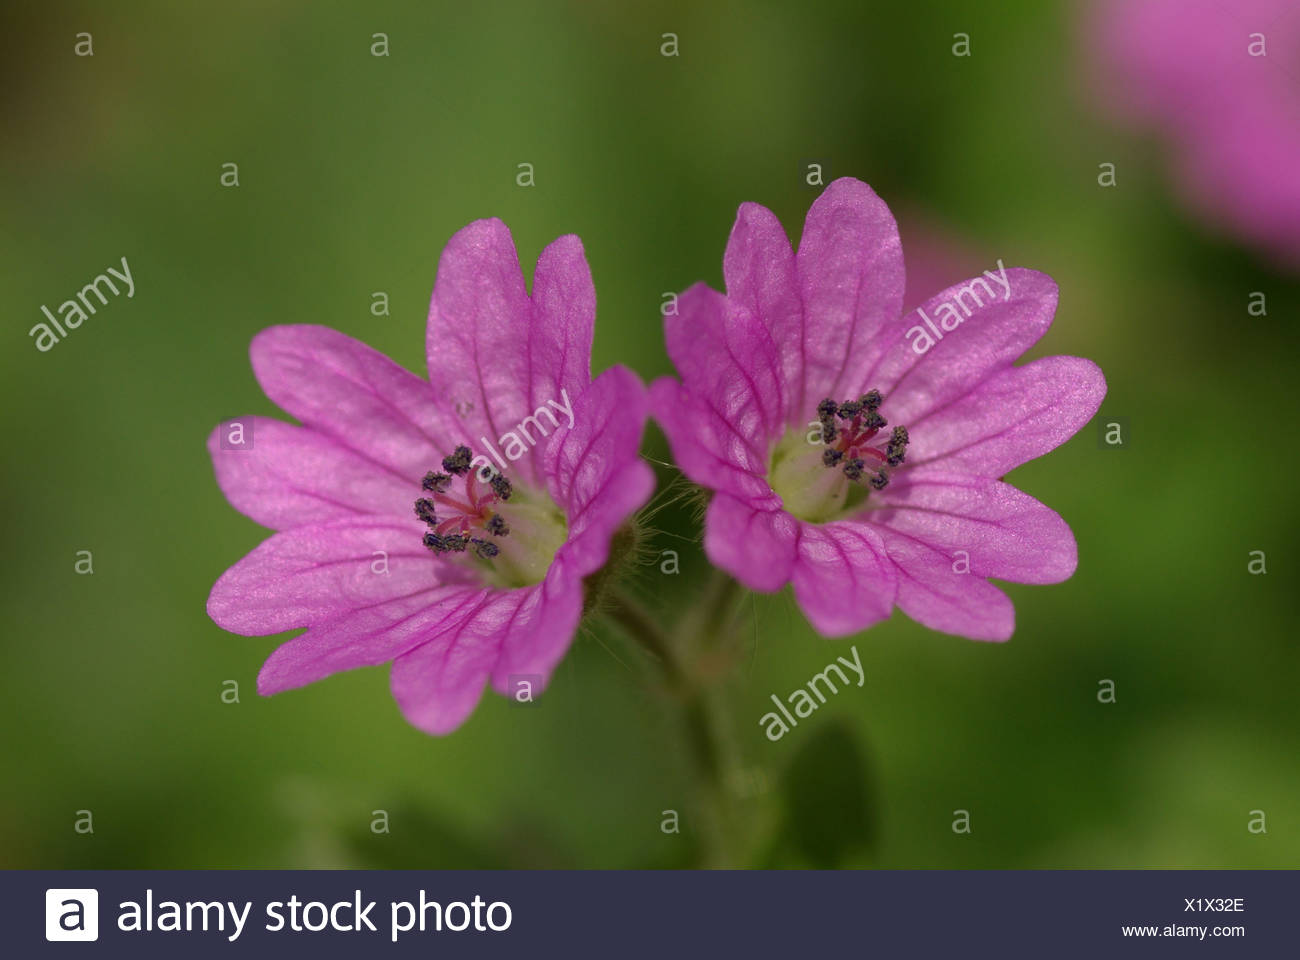 Wonderbaar Bloeiende Plant Met Roze Bloemen Stock Photos & Bloeiende Plant EG-26